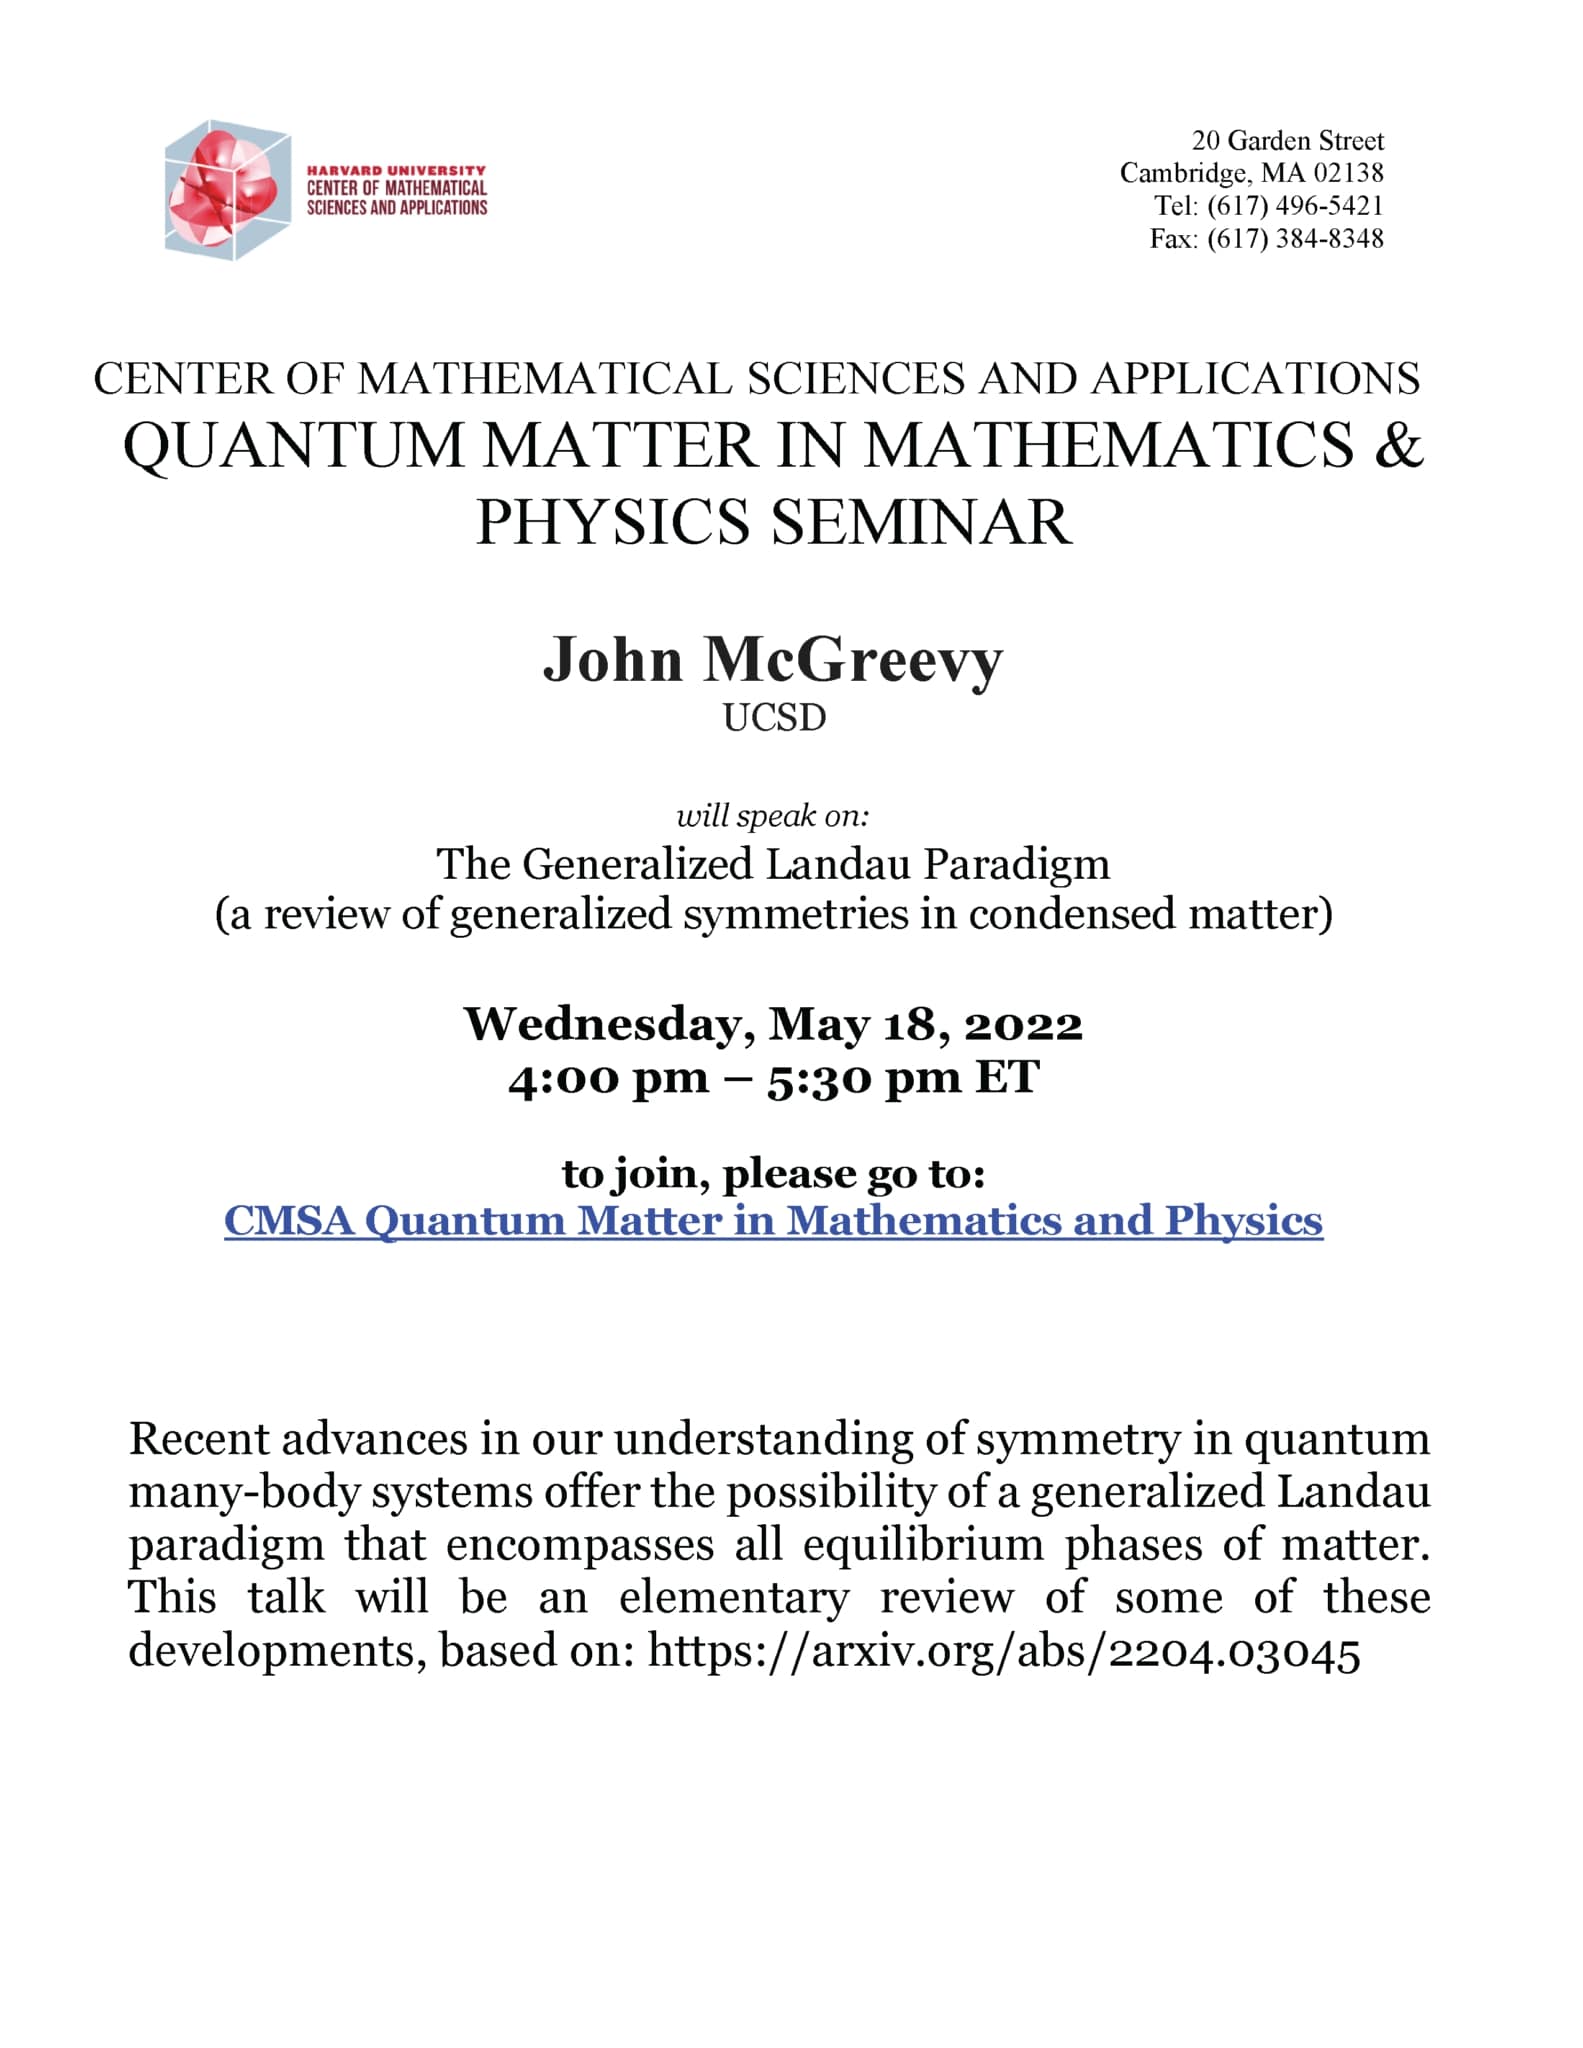 CMSA-QMMP-Seminar-05.18.22-1583x2048-1